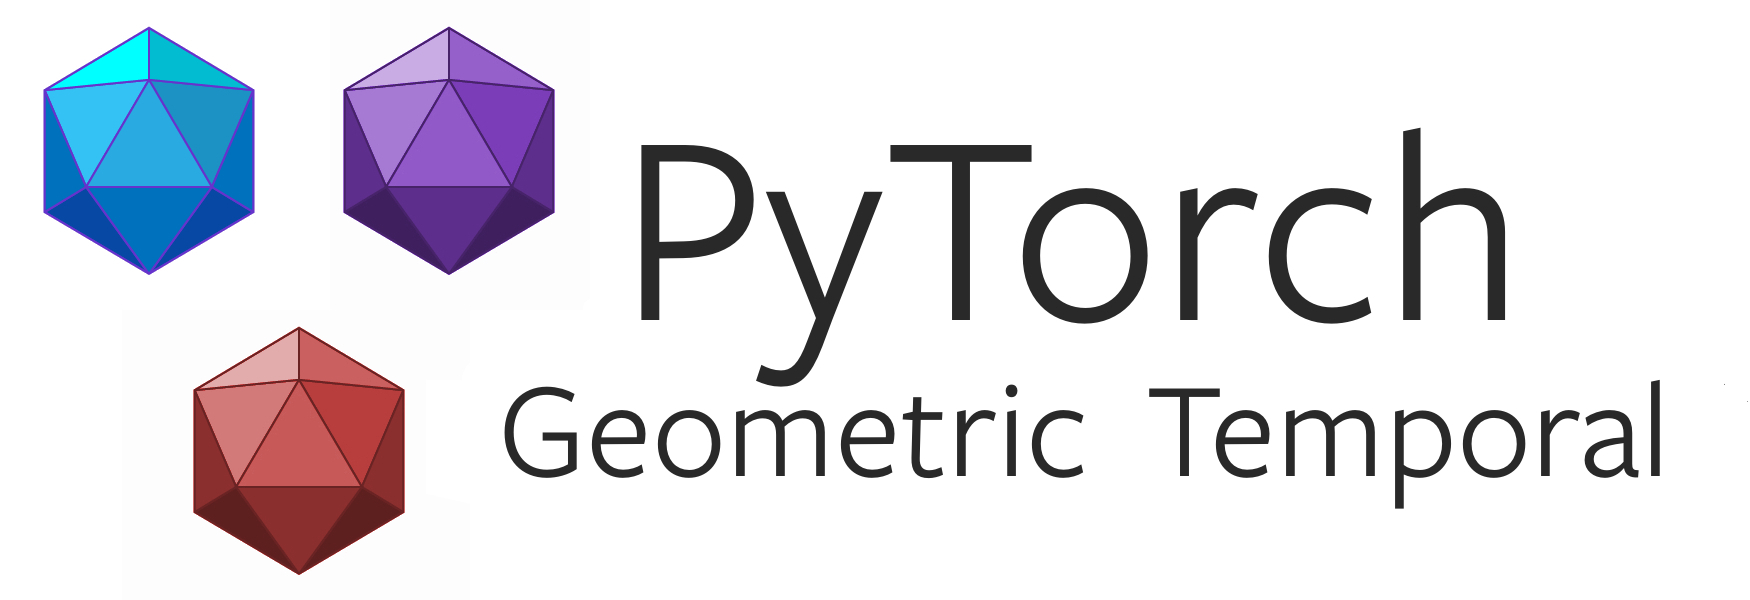 pytorch_geometric_temporal